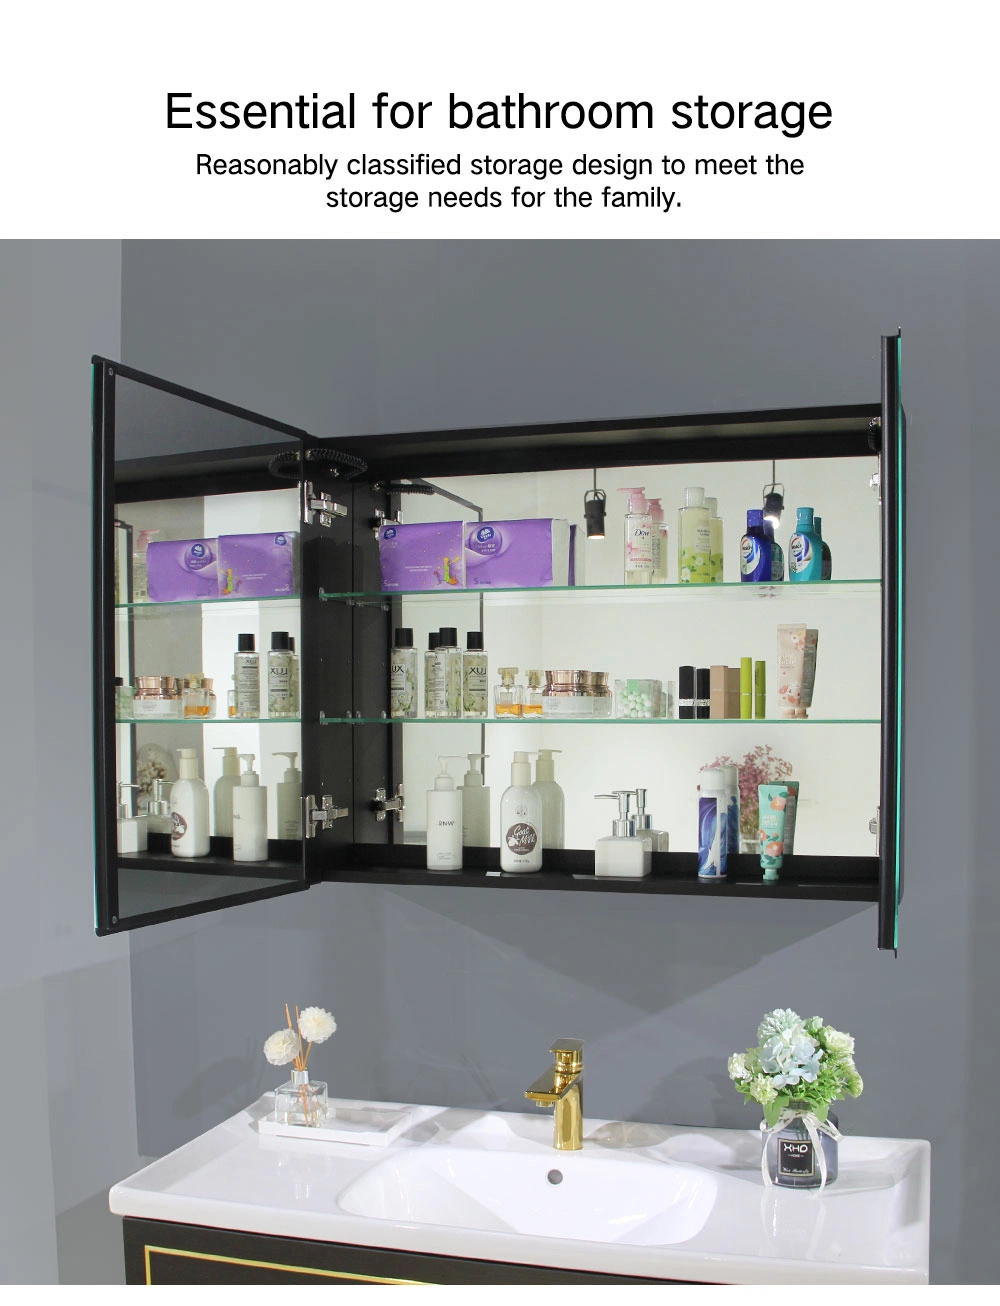 Design Hotel LED Backlit Light Mirror / Wall Mounted Smart LED Mirror Cabinet Custom Made Size